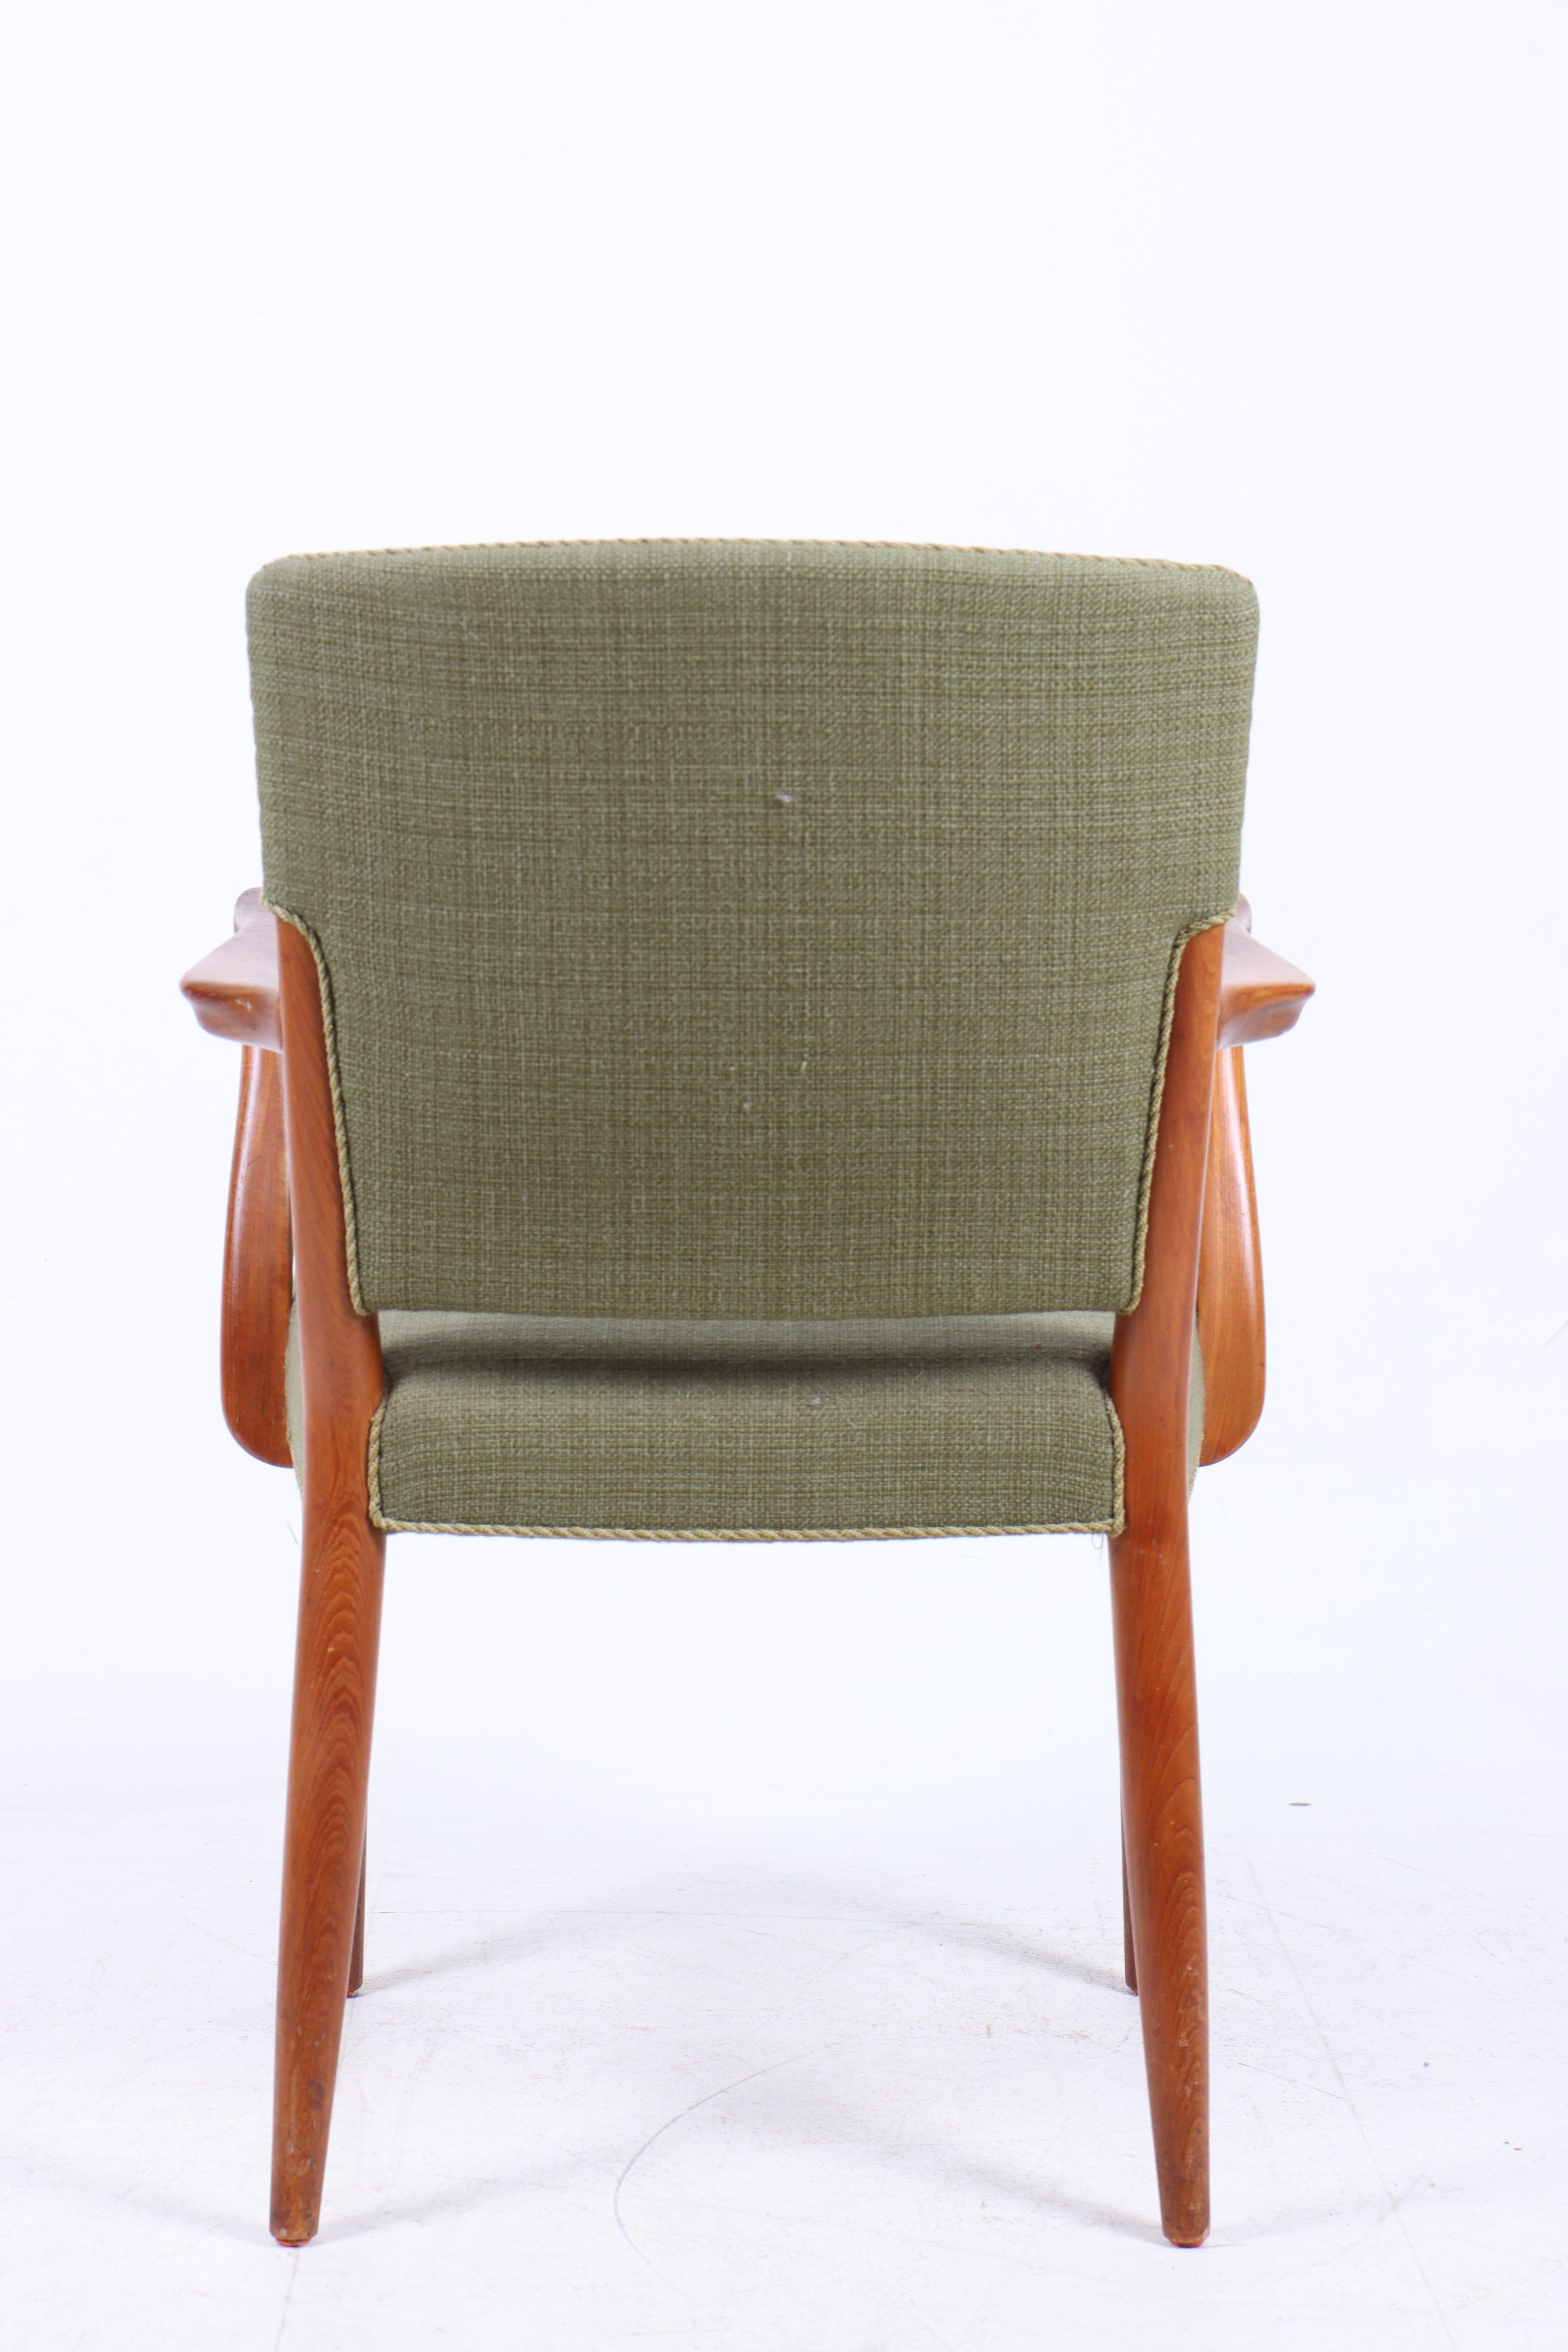 Side chair in teak and fabric, designed by Peter Hvidt & Orla Mølgaard for cabinetmaker Gustav Bertelsen. Great original condition.